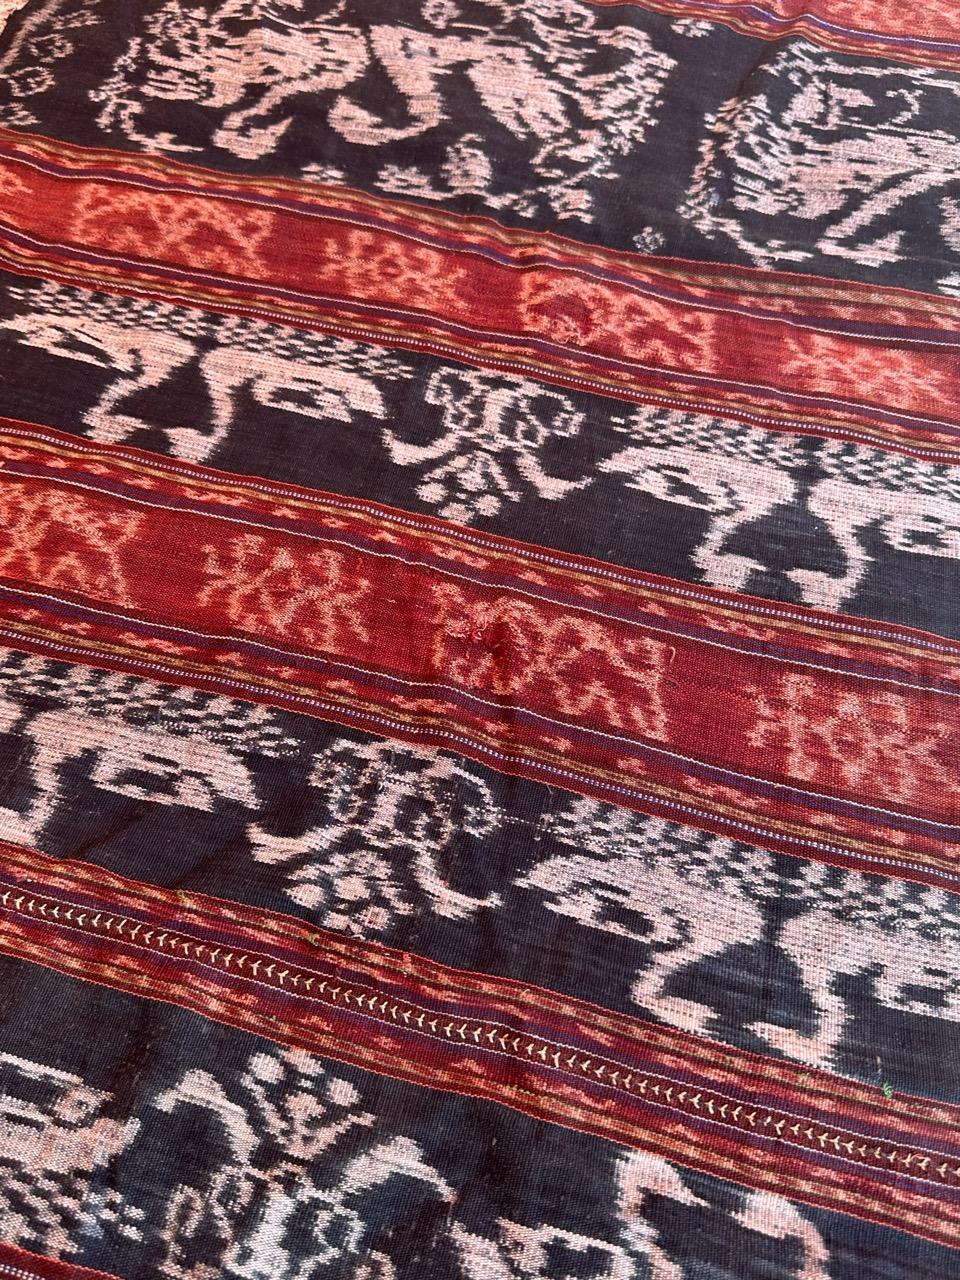 Bobyrug’s Vintage Indonesian Ikat Tapestry or Tablecloth For Sale 2